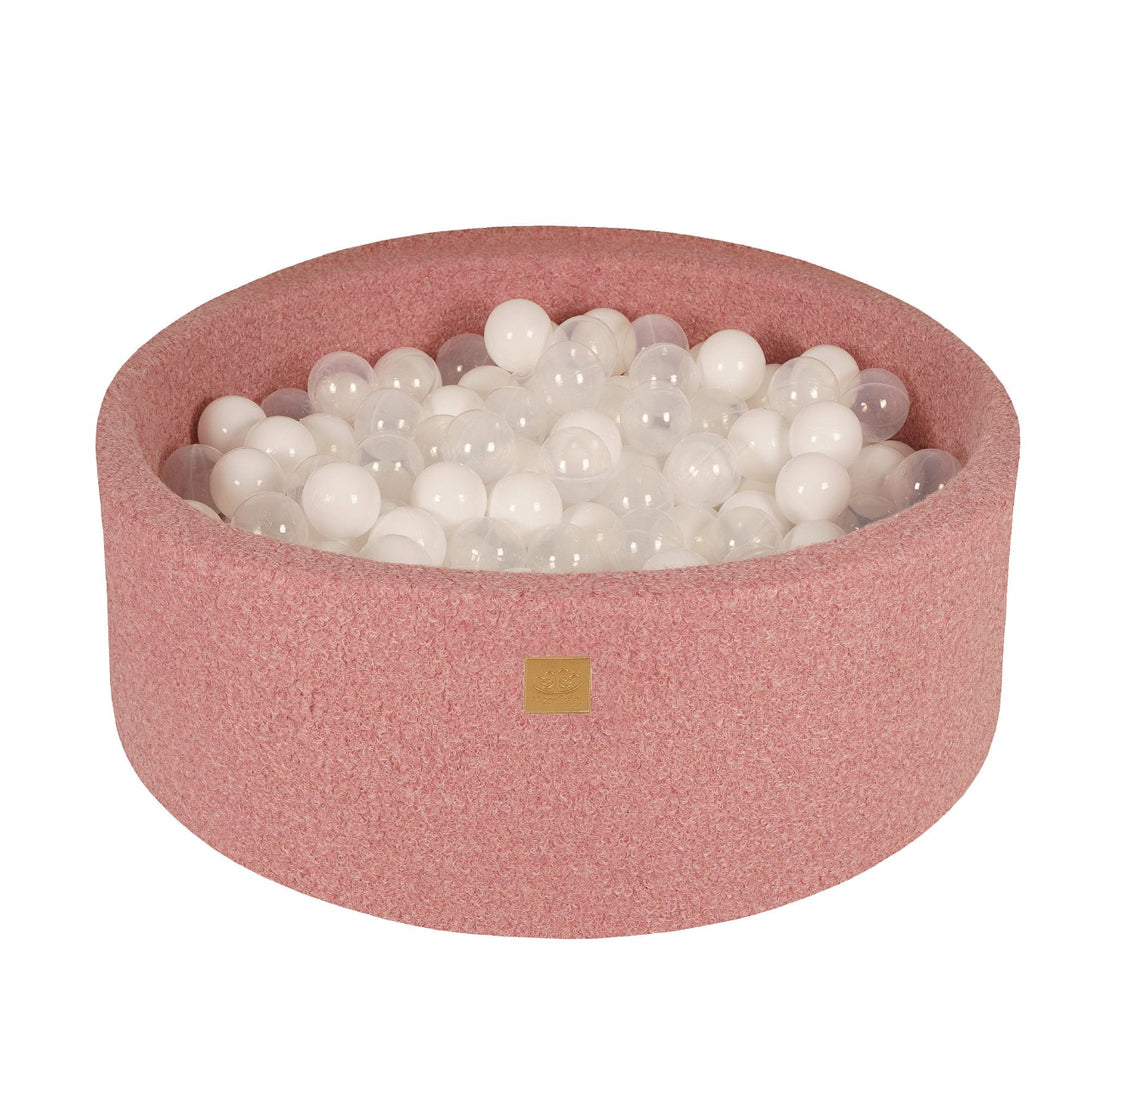 Bouclé Ball Pit, Pink